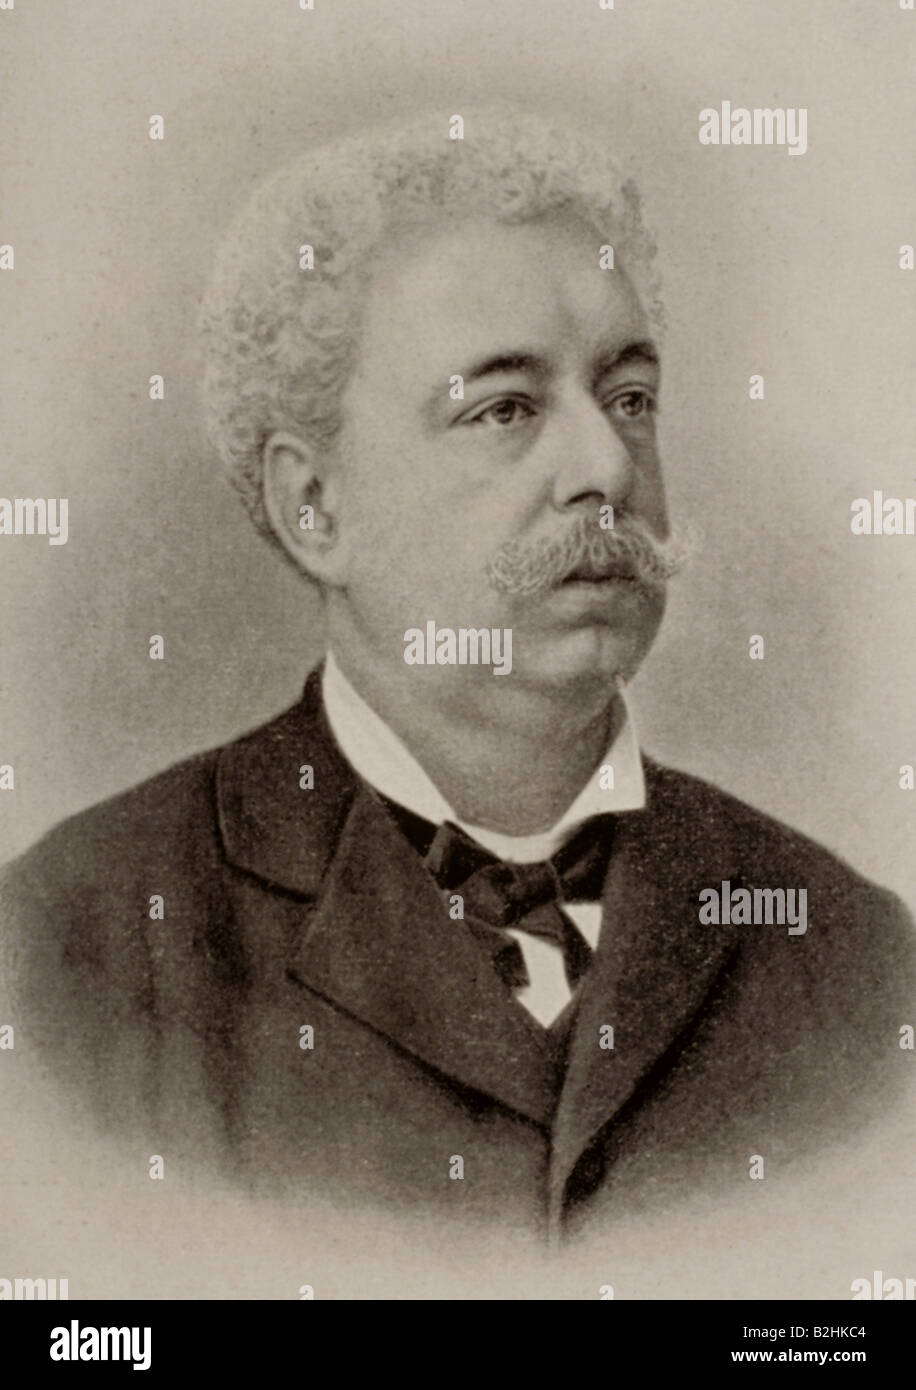 Amicis, Edmondo de, 21.10.1846 - 11.3.1908, Italian author / writer, portrait, wood engraving, late, 19th century, , Stock Photo